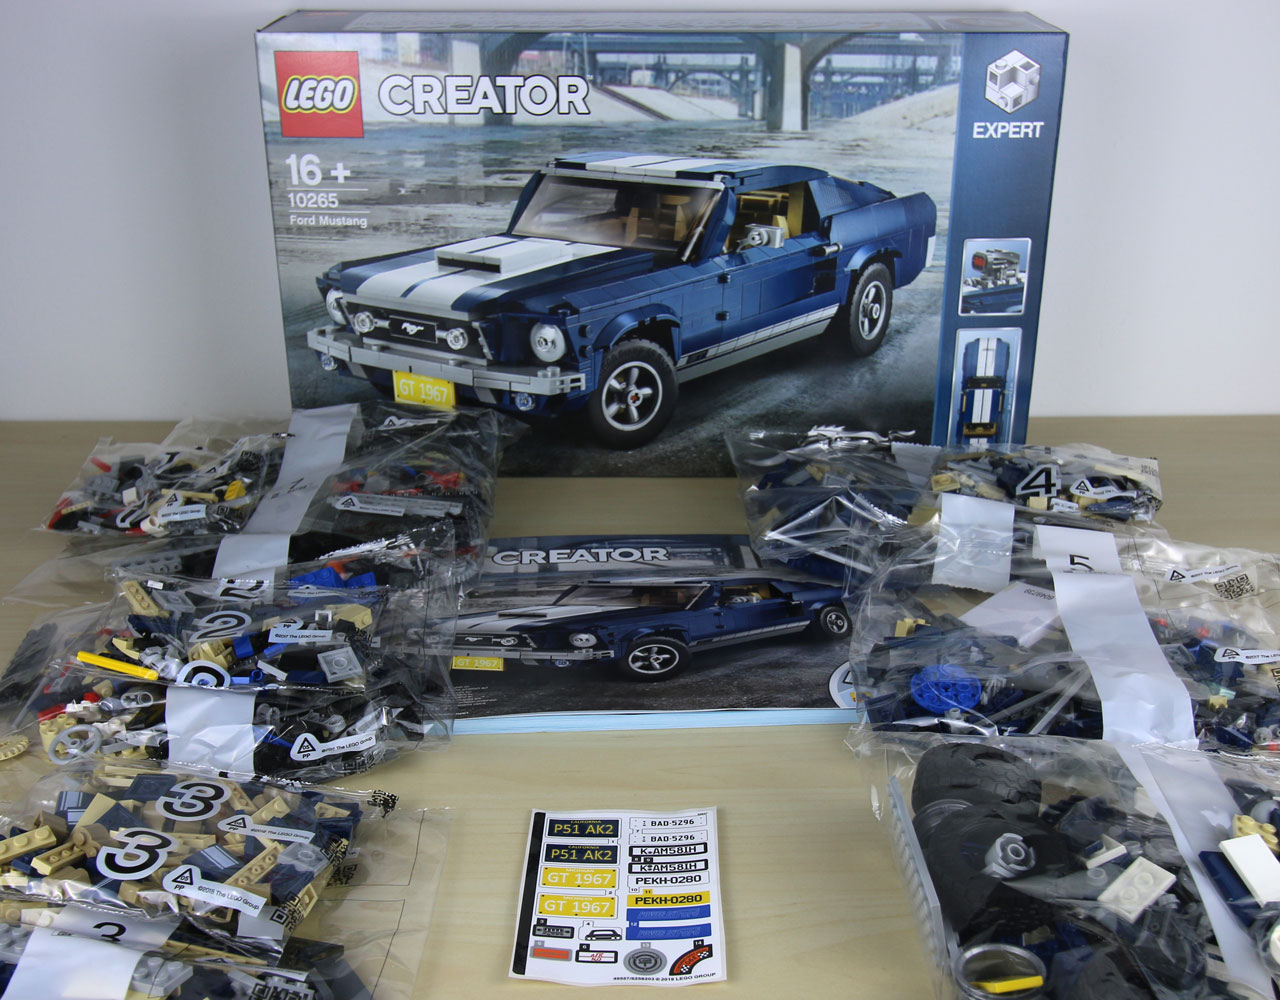 LEGO Creator Expert Ford Mustang 10265: Ausgepackt und erste Gedanken